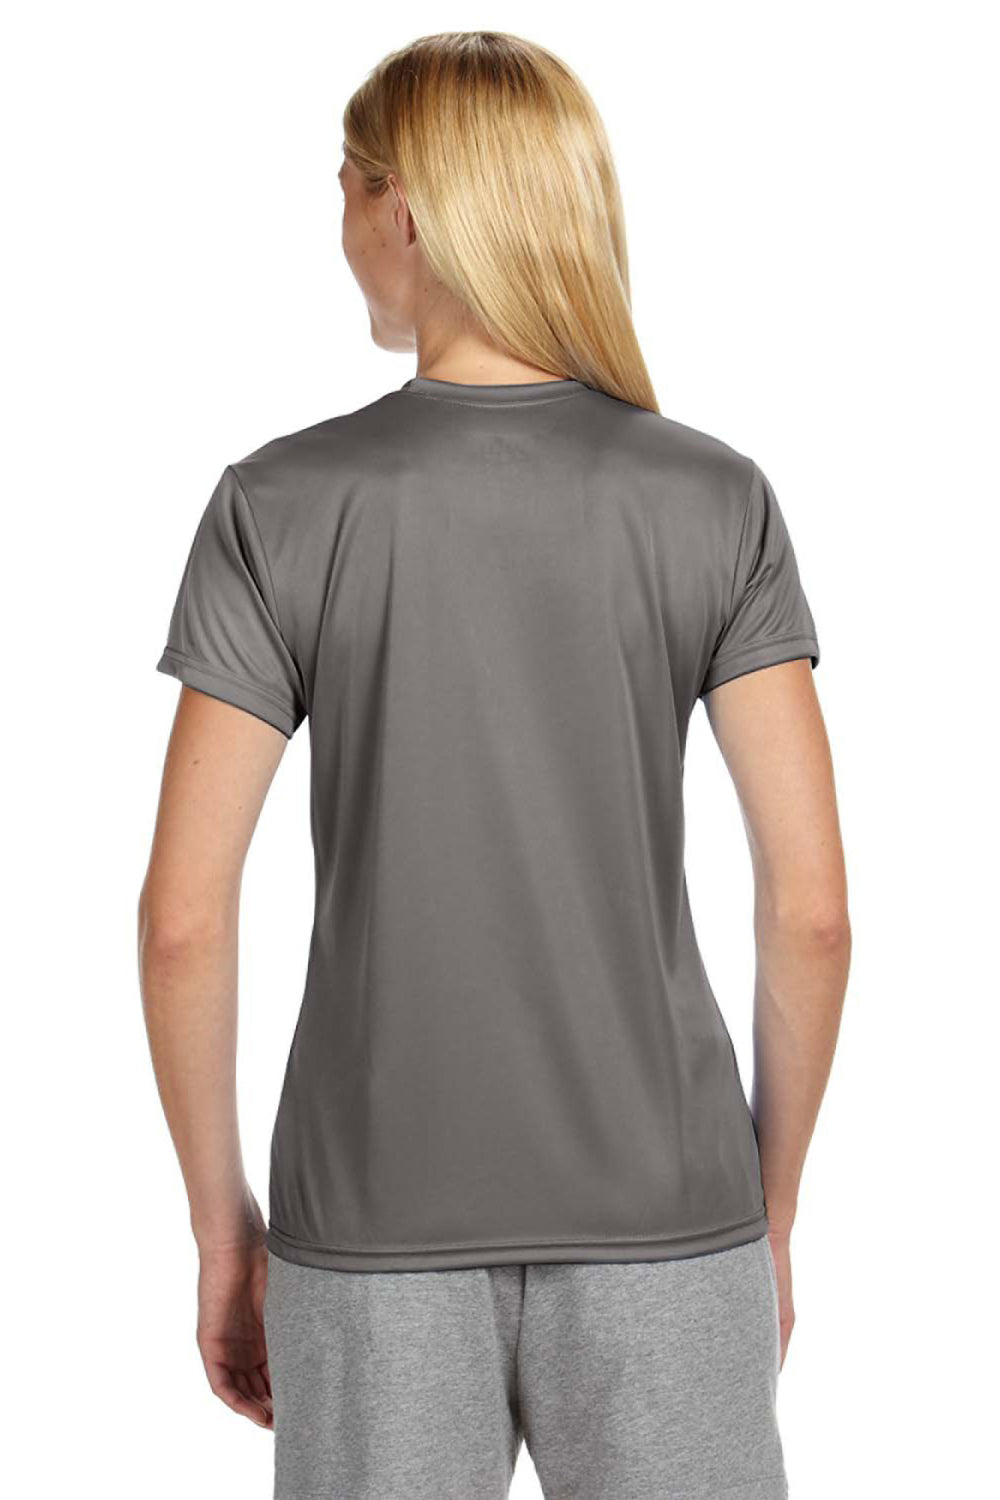 A4 NW3201 Womens Performance Moisture Wicking Short Sleeve Crewneck T-Shirt Graphite Grey Model Back